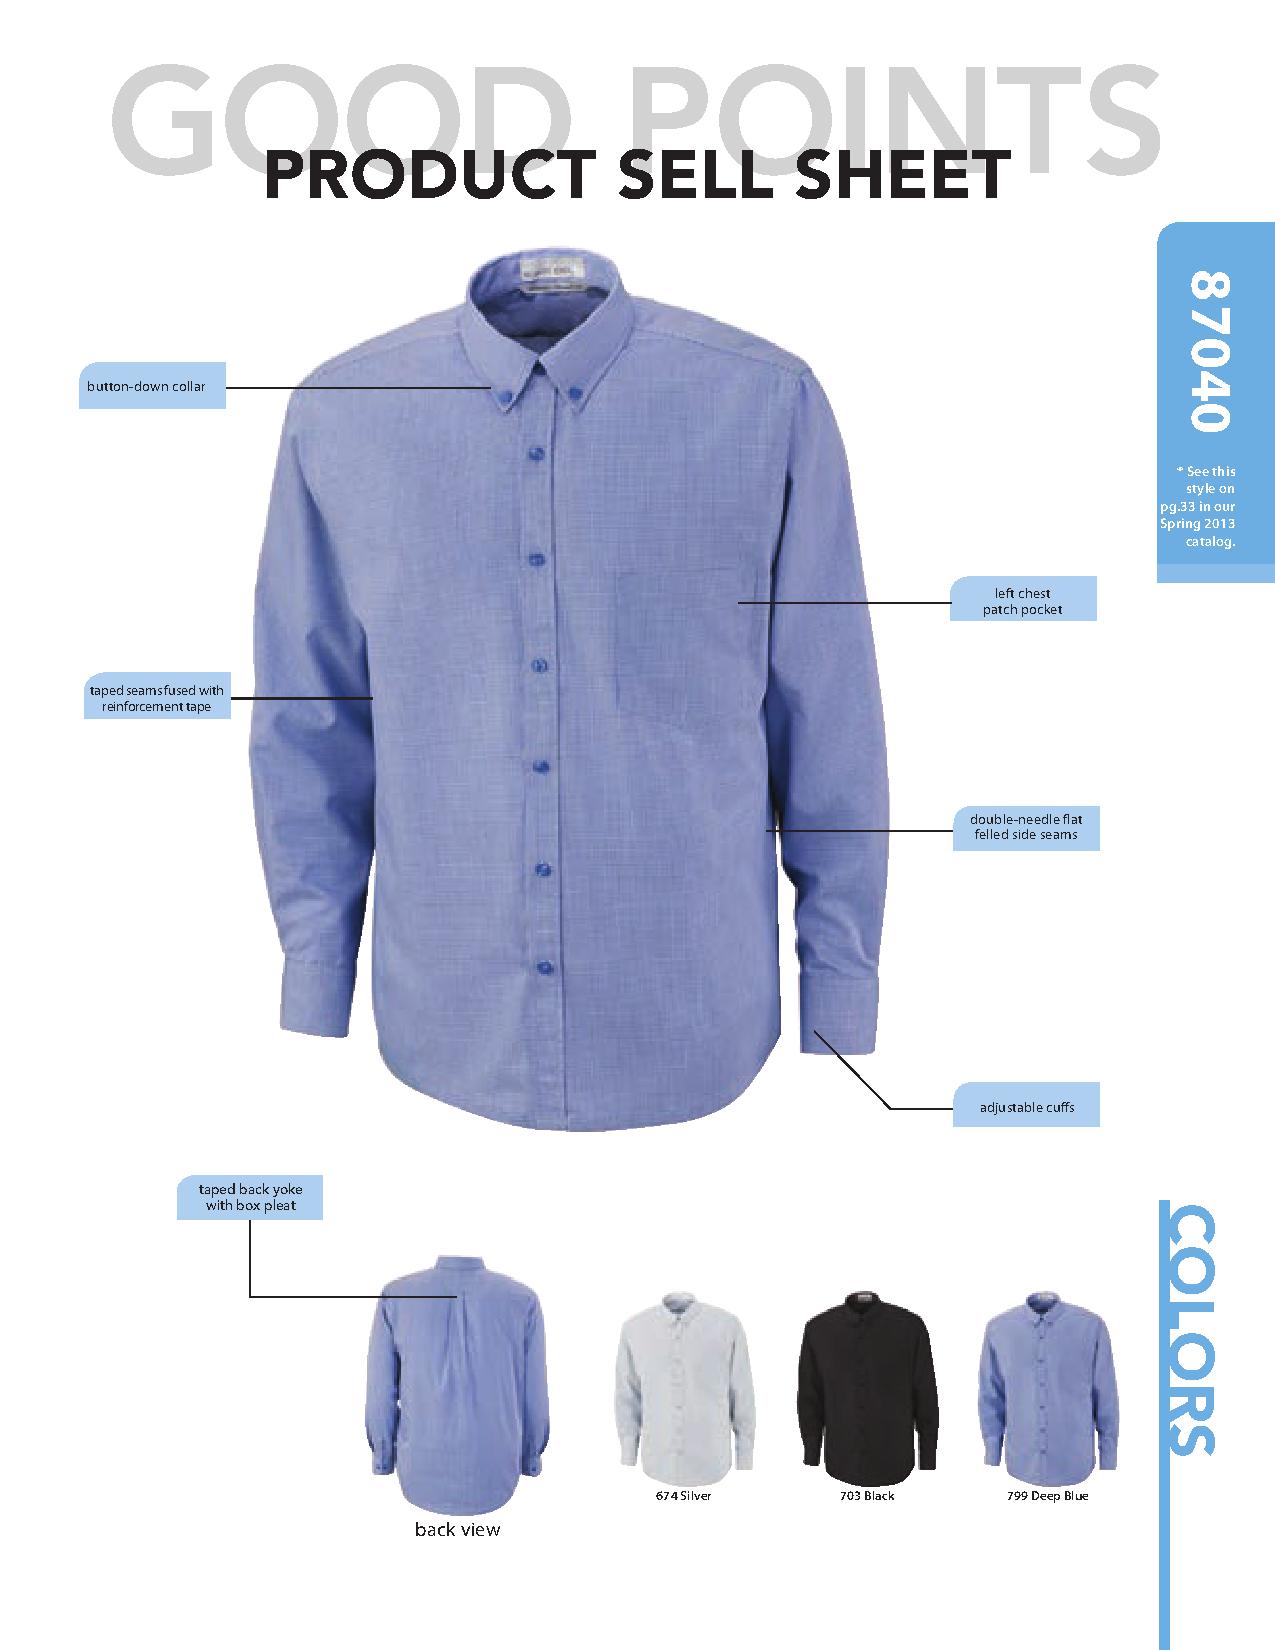 Ash City Wrinkle Resistant 87040 - Echelon Men's Wrinkle Resist Cotton Blend Houndstooth Taped Shirt